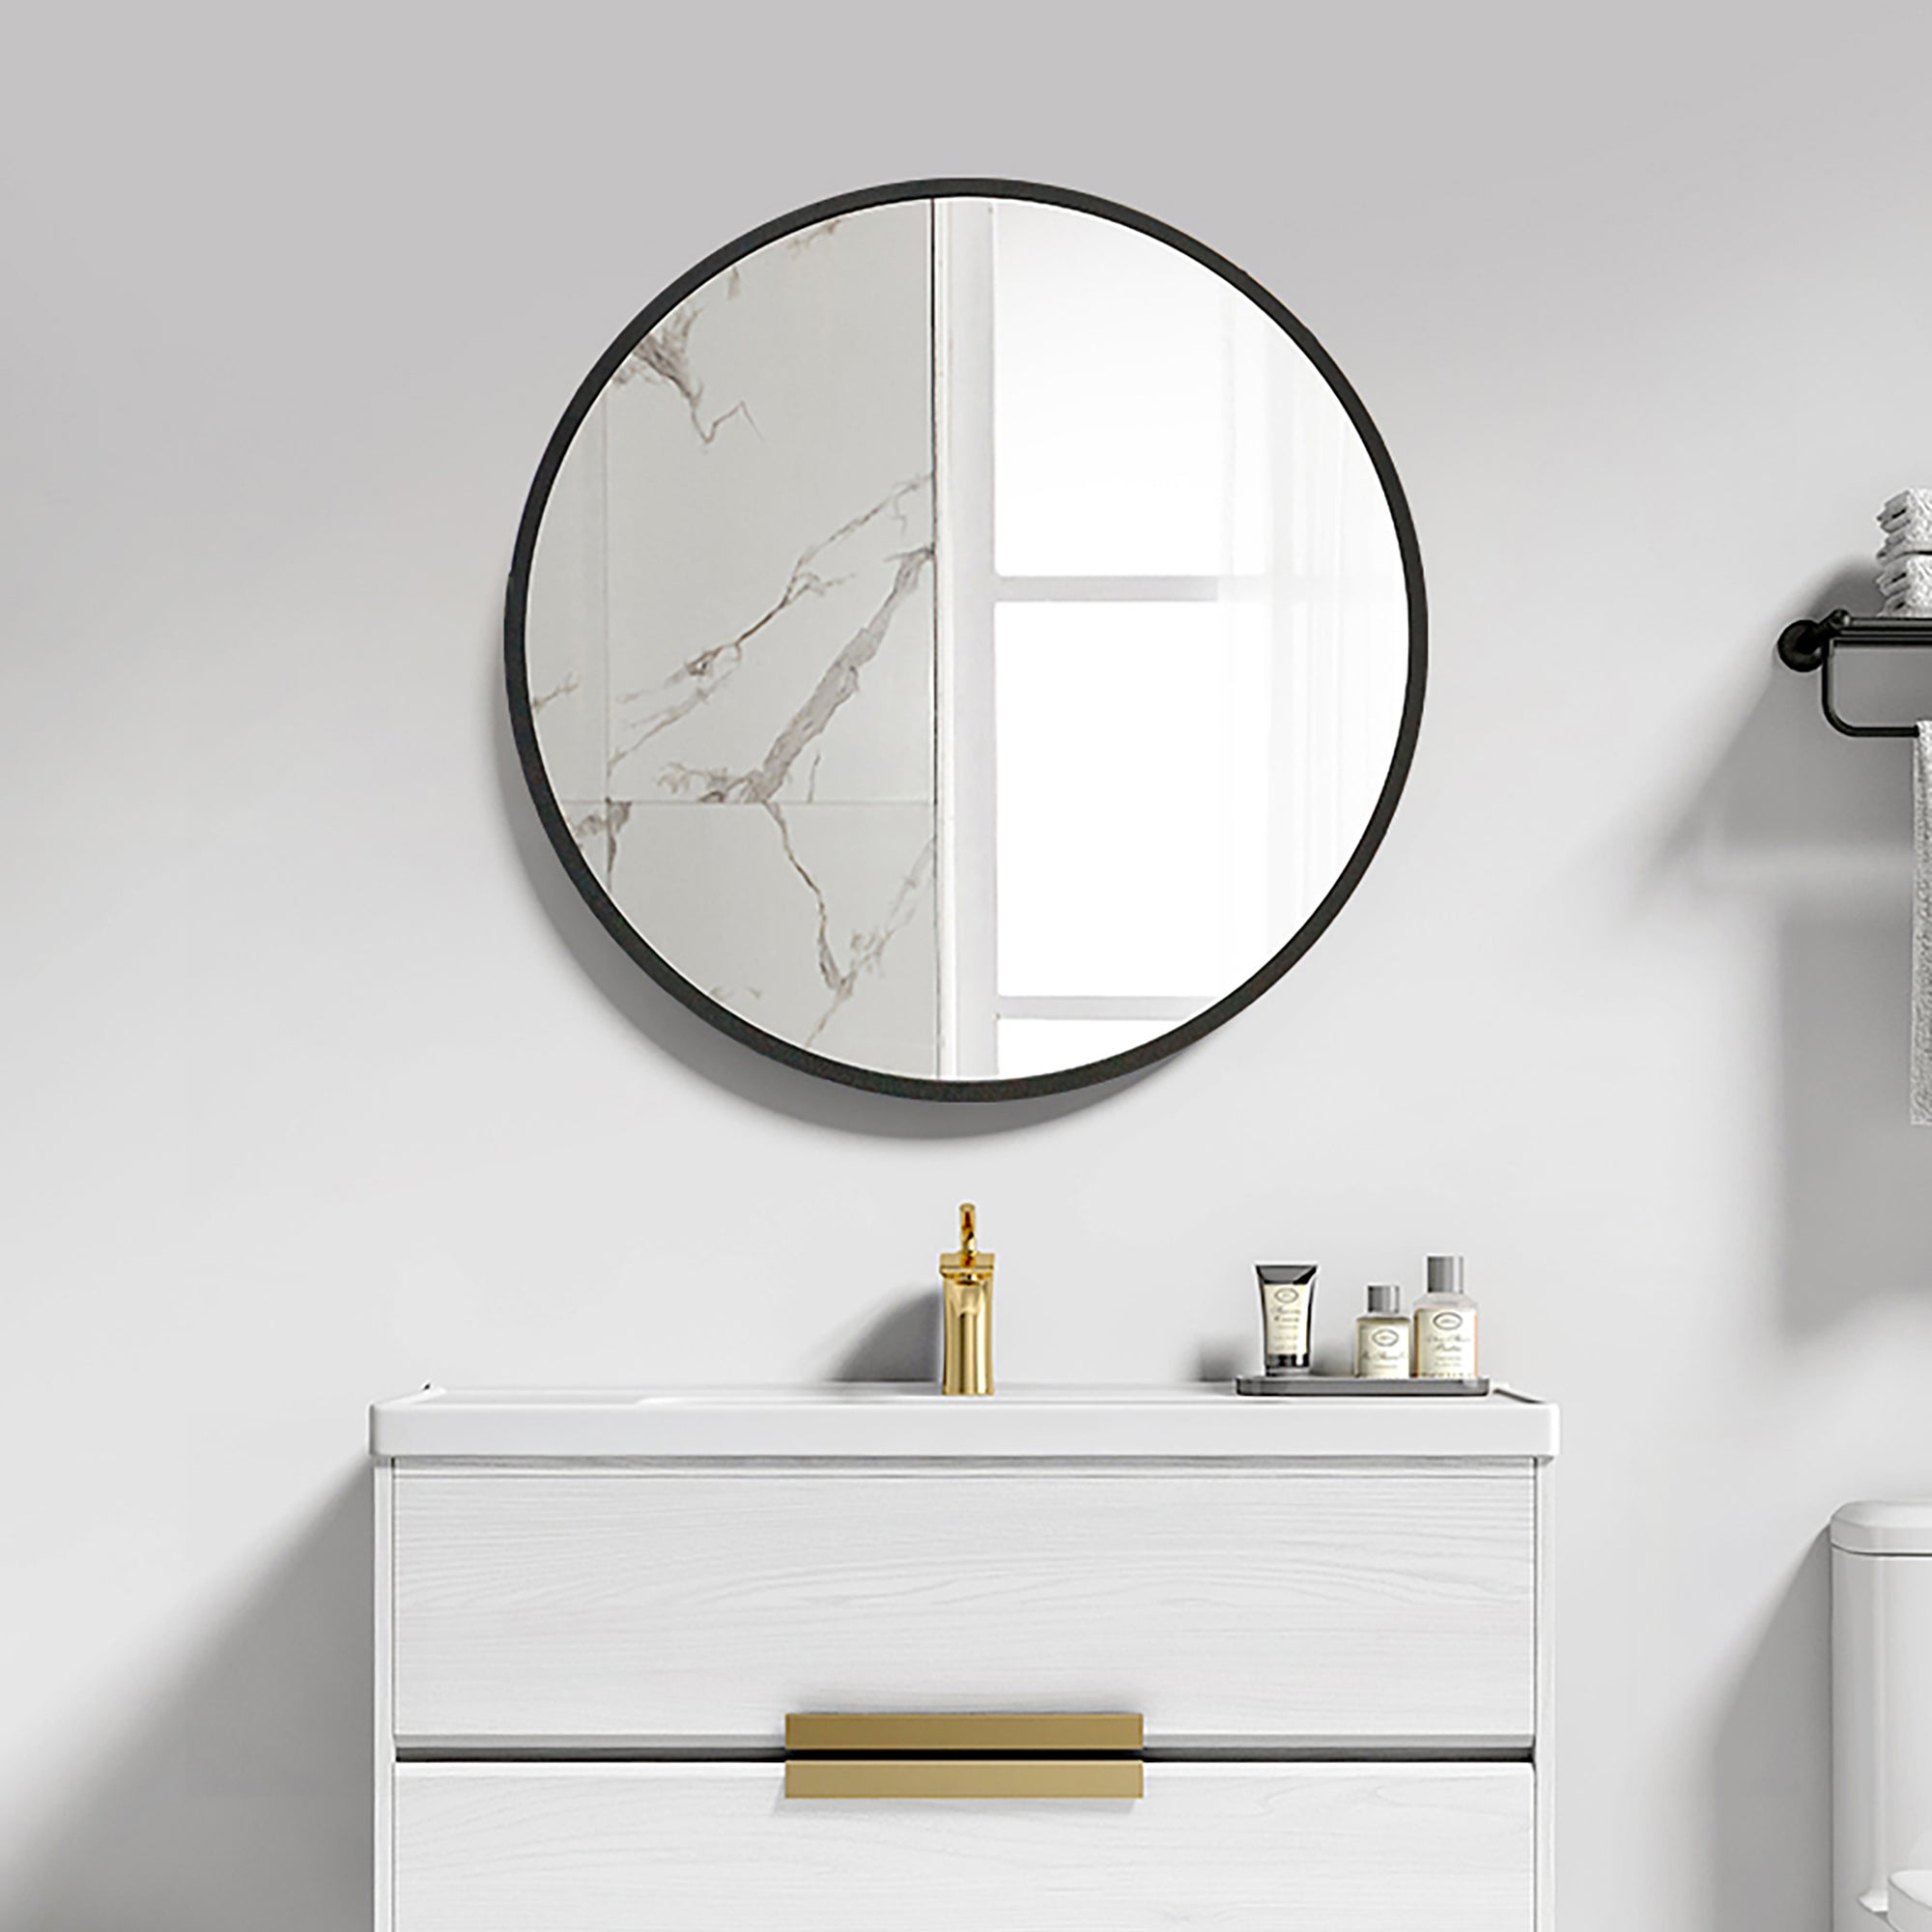 Staykiwi Medicine Cabinet Round 24 x 24 Inch, Wall Mount Bathroom Cabinet with Mirror, Circular Black Metal Framed Bath Storage Cabinet Surface Mounted